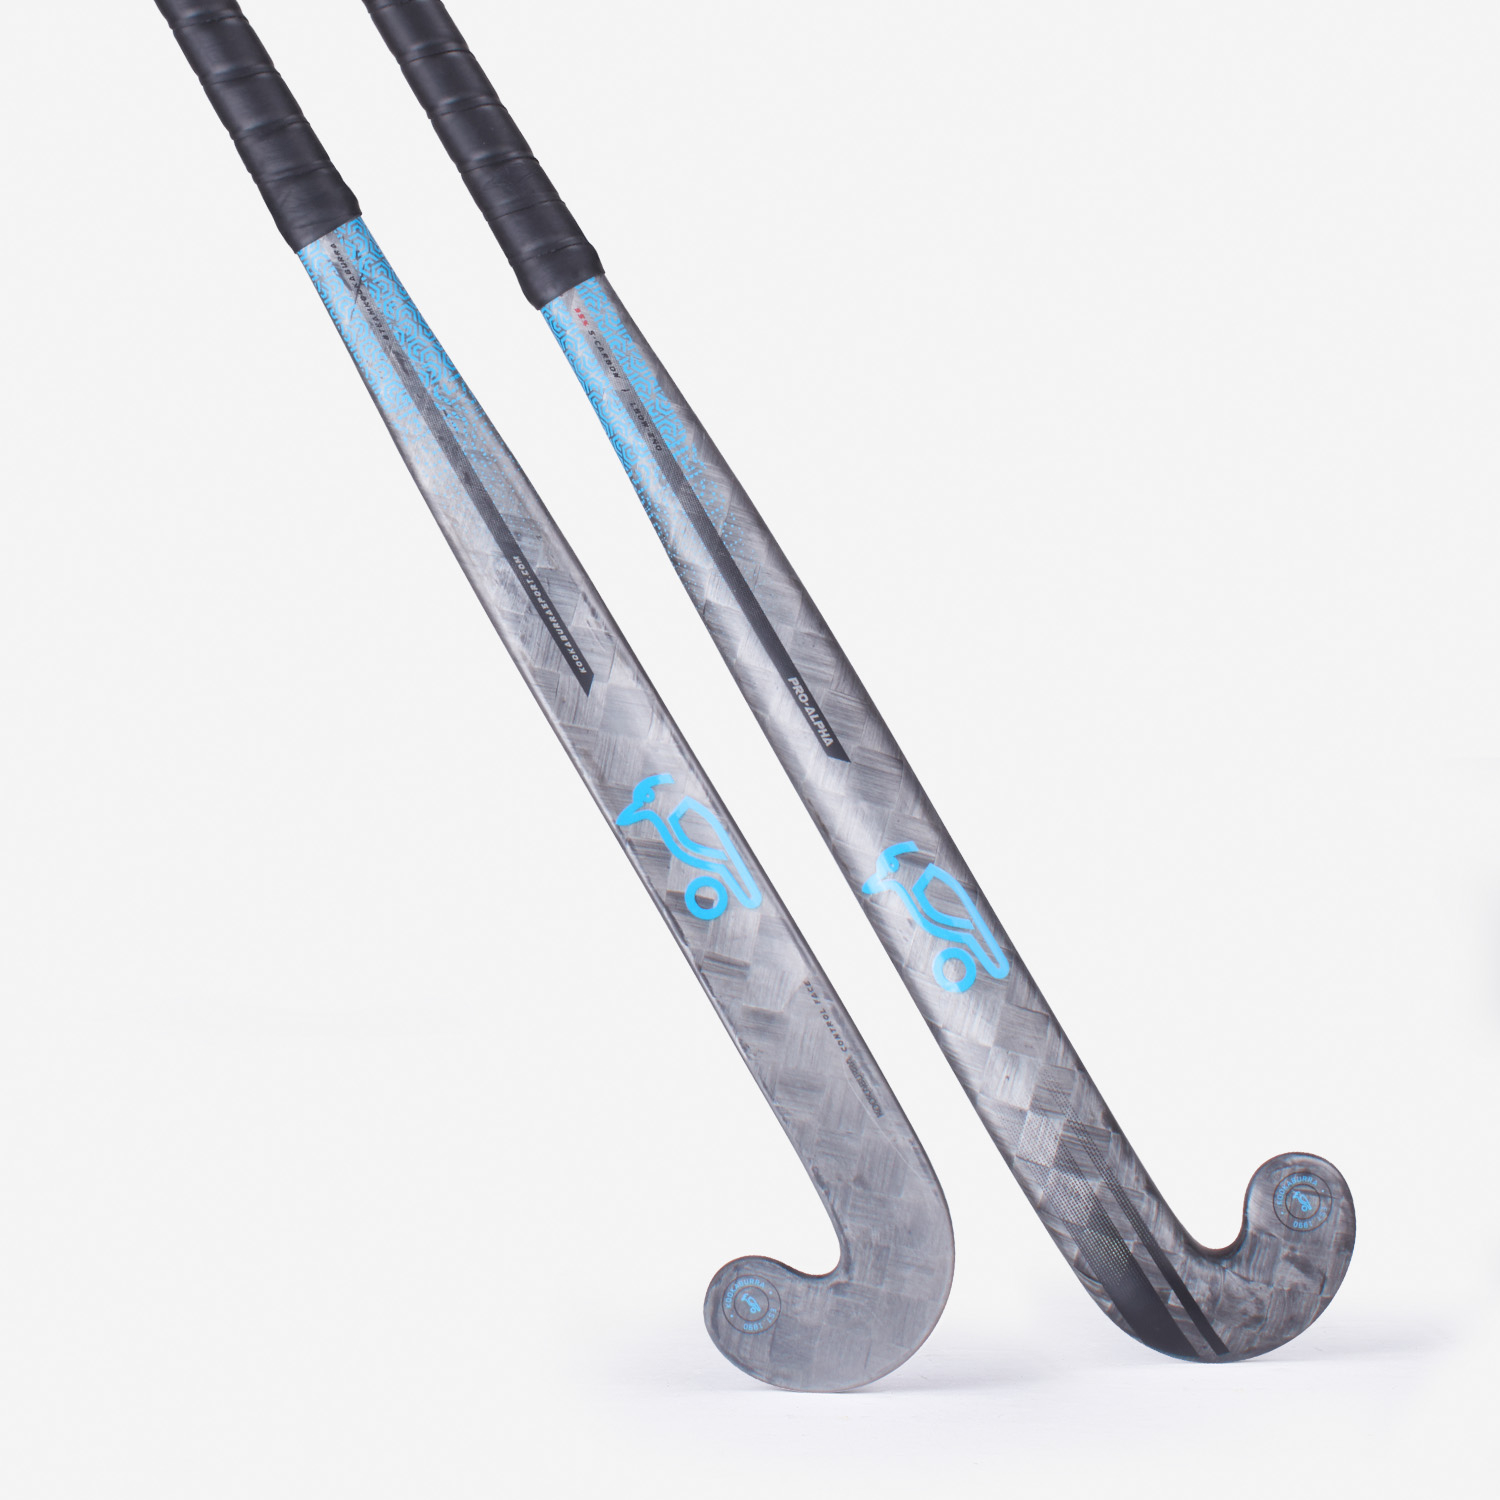 Kookaburra Pro Alpha Hockey Stick